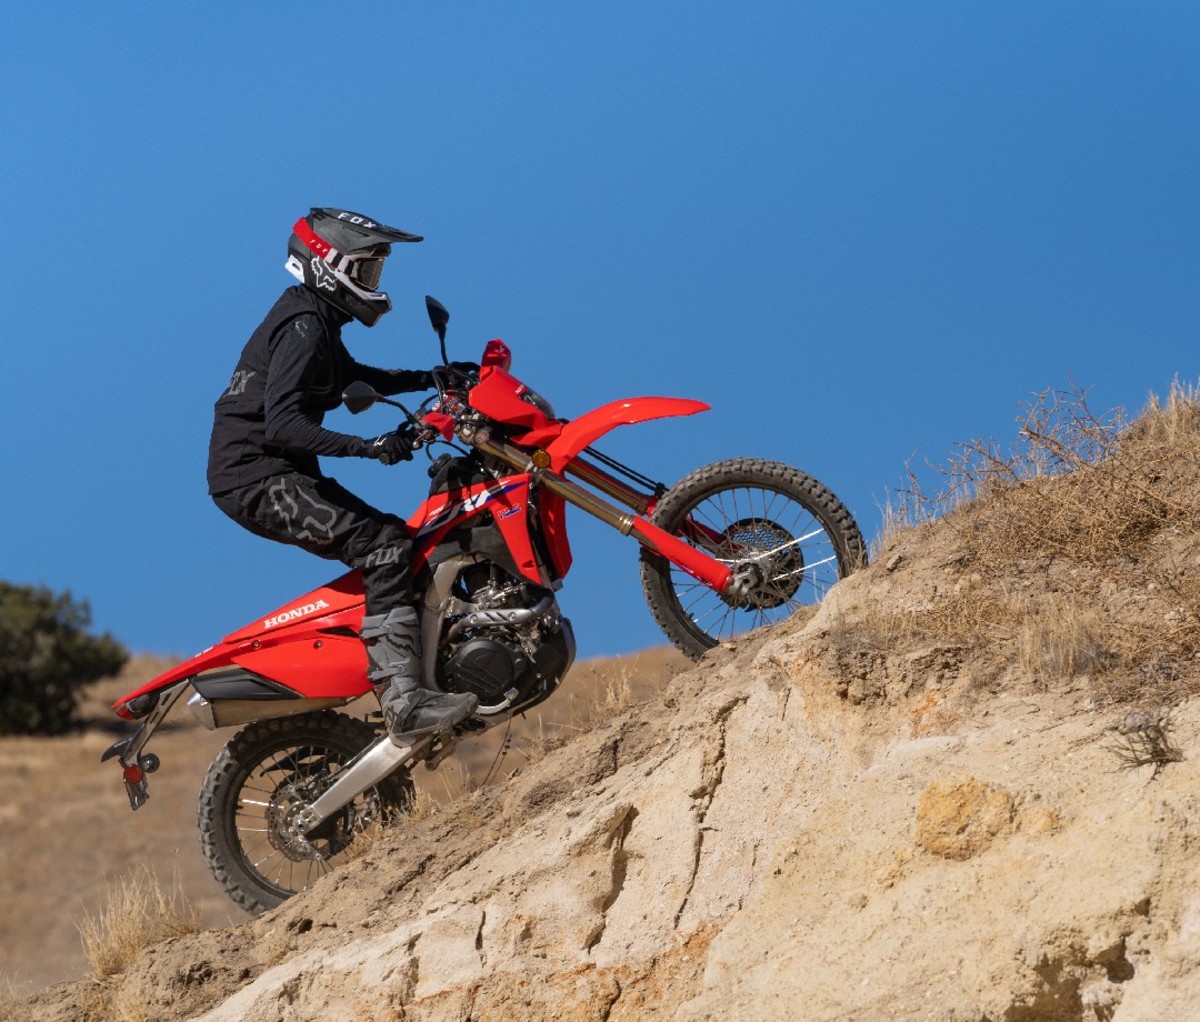 Man riding red dirt bike up steep hill